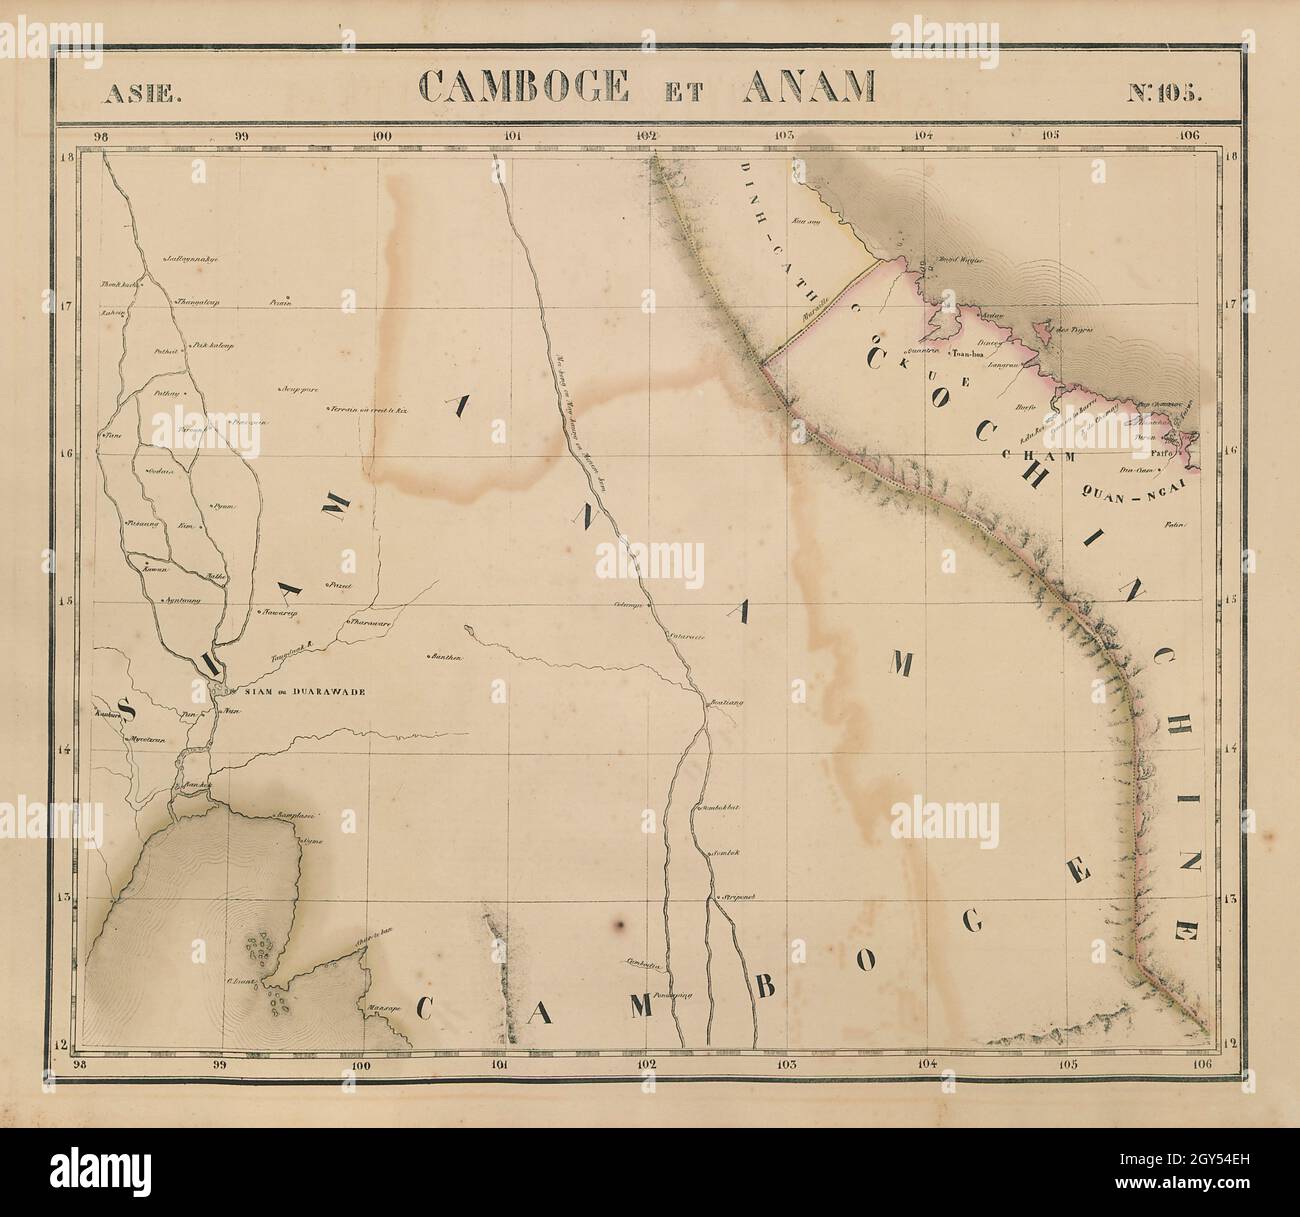 Asie. Camboge & Anam #105 Indochina Thailand Kambodscha Laos VANDERMAELEN 1827 Karte Stockfoto